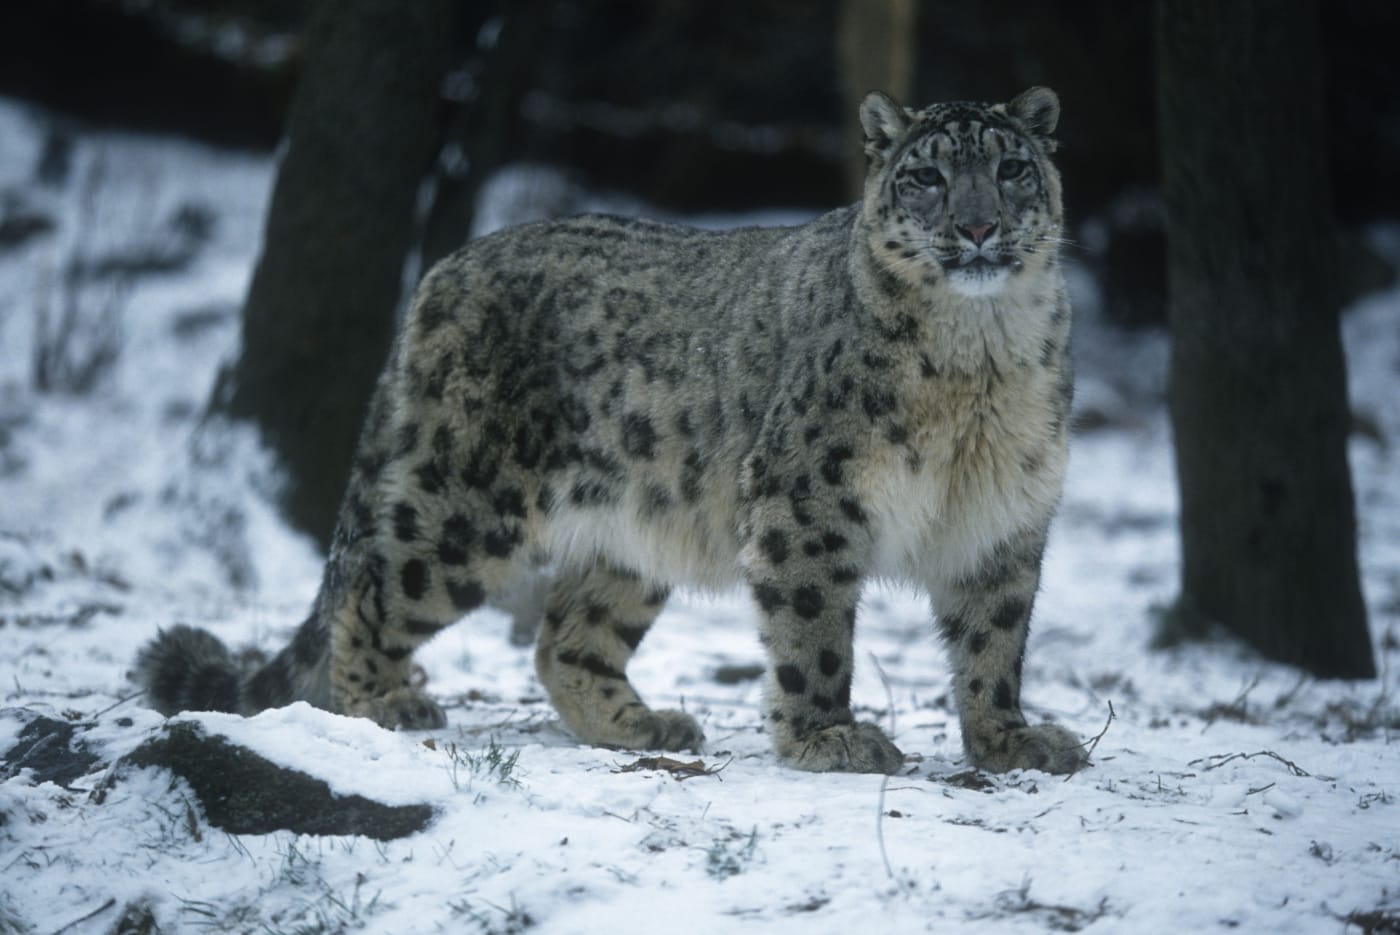 Snow leopard (Uncia uncia) standing in snow